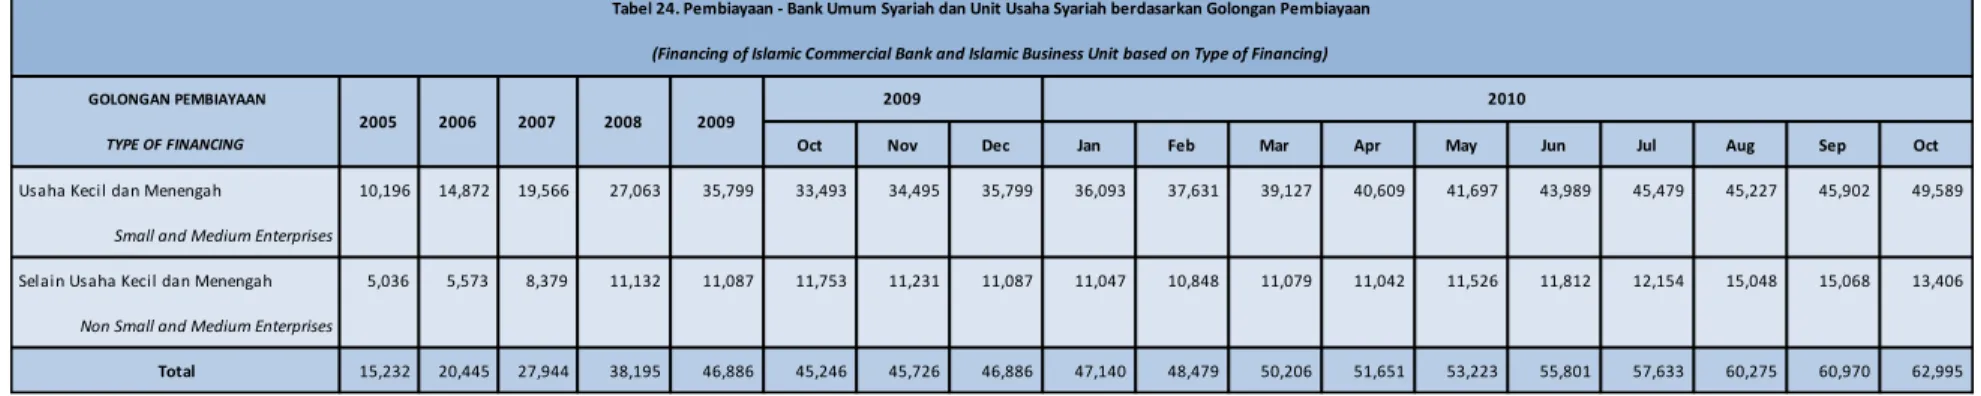 Tabel 24. Pembiayaan - Bank Umum Syariah dan Unit Usaha Syariah berdasarkan Golongan Pembiayaan 